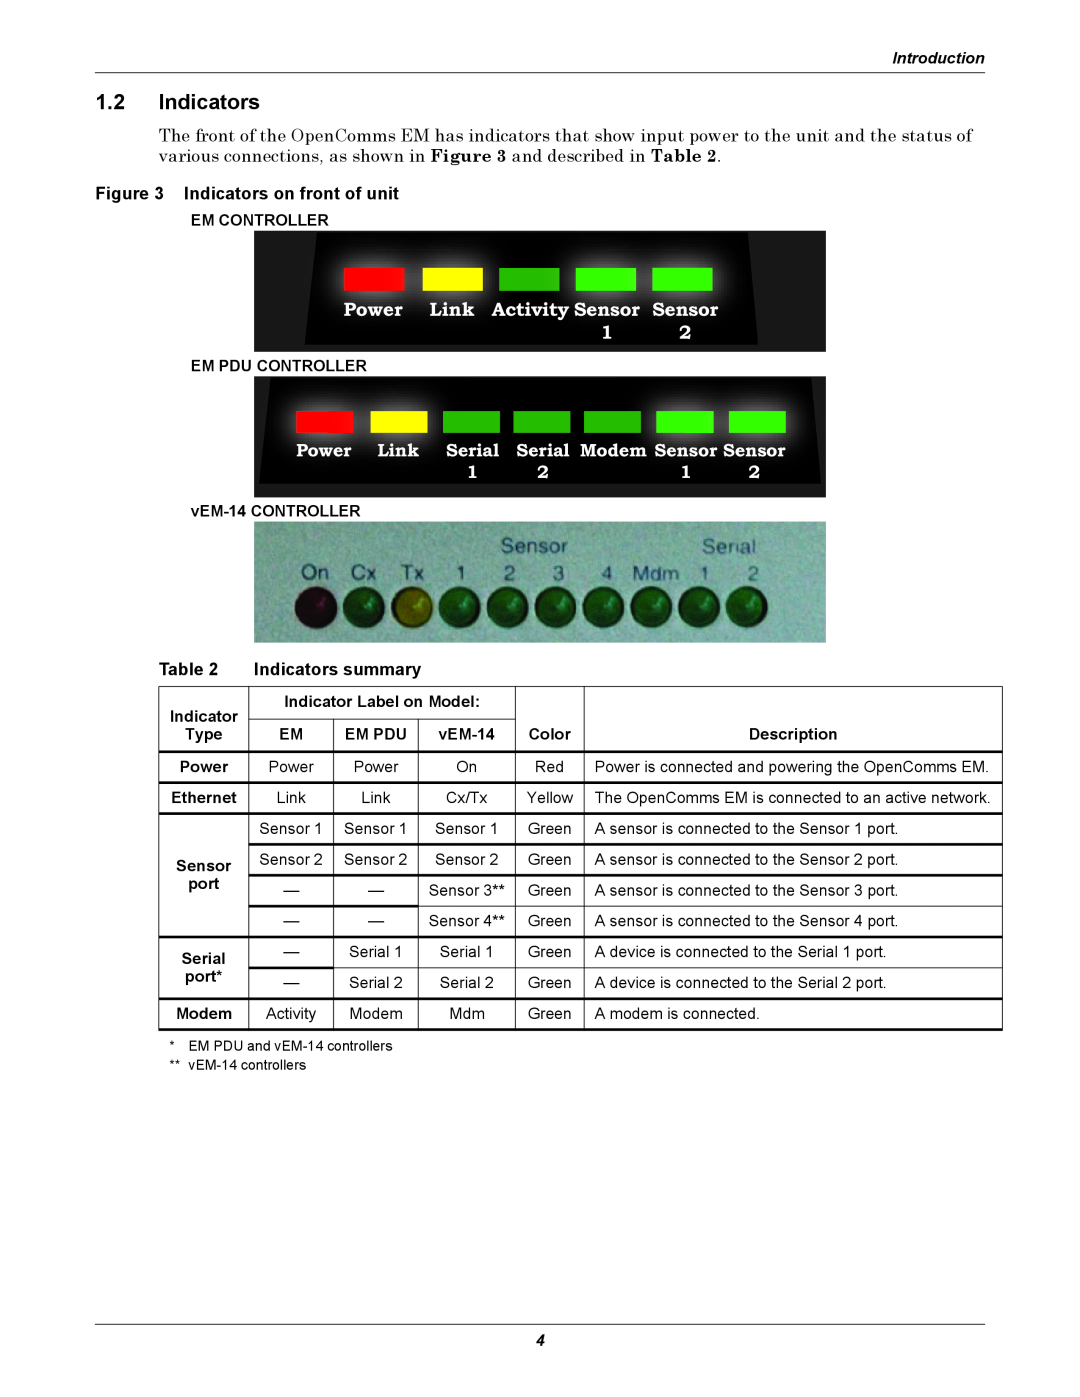 Liebert EM Power Link Activity Sensor, Power Link Serial, Serial Modem Sensor Sensor, Indicators summary, Introduction 